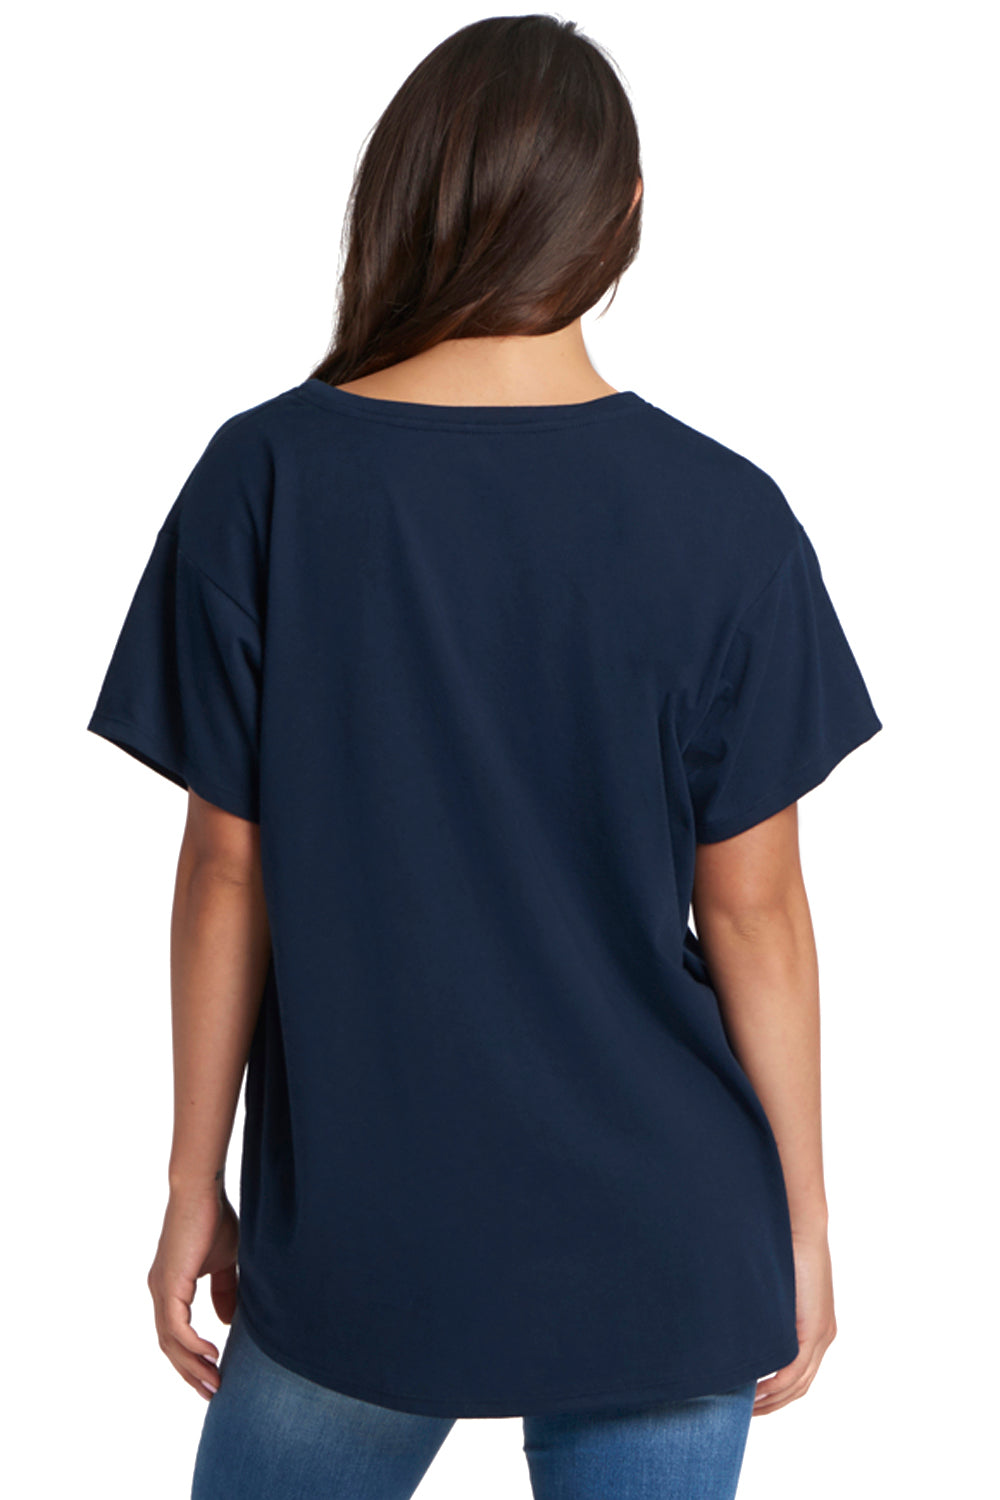 Next Level N1530 Womens Ideal Flow Short Sleeve Crewneck T-Shirt Navy Blue Back